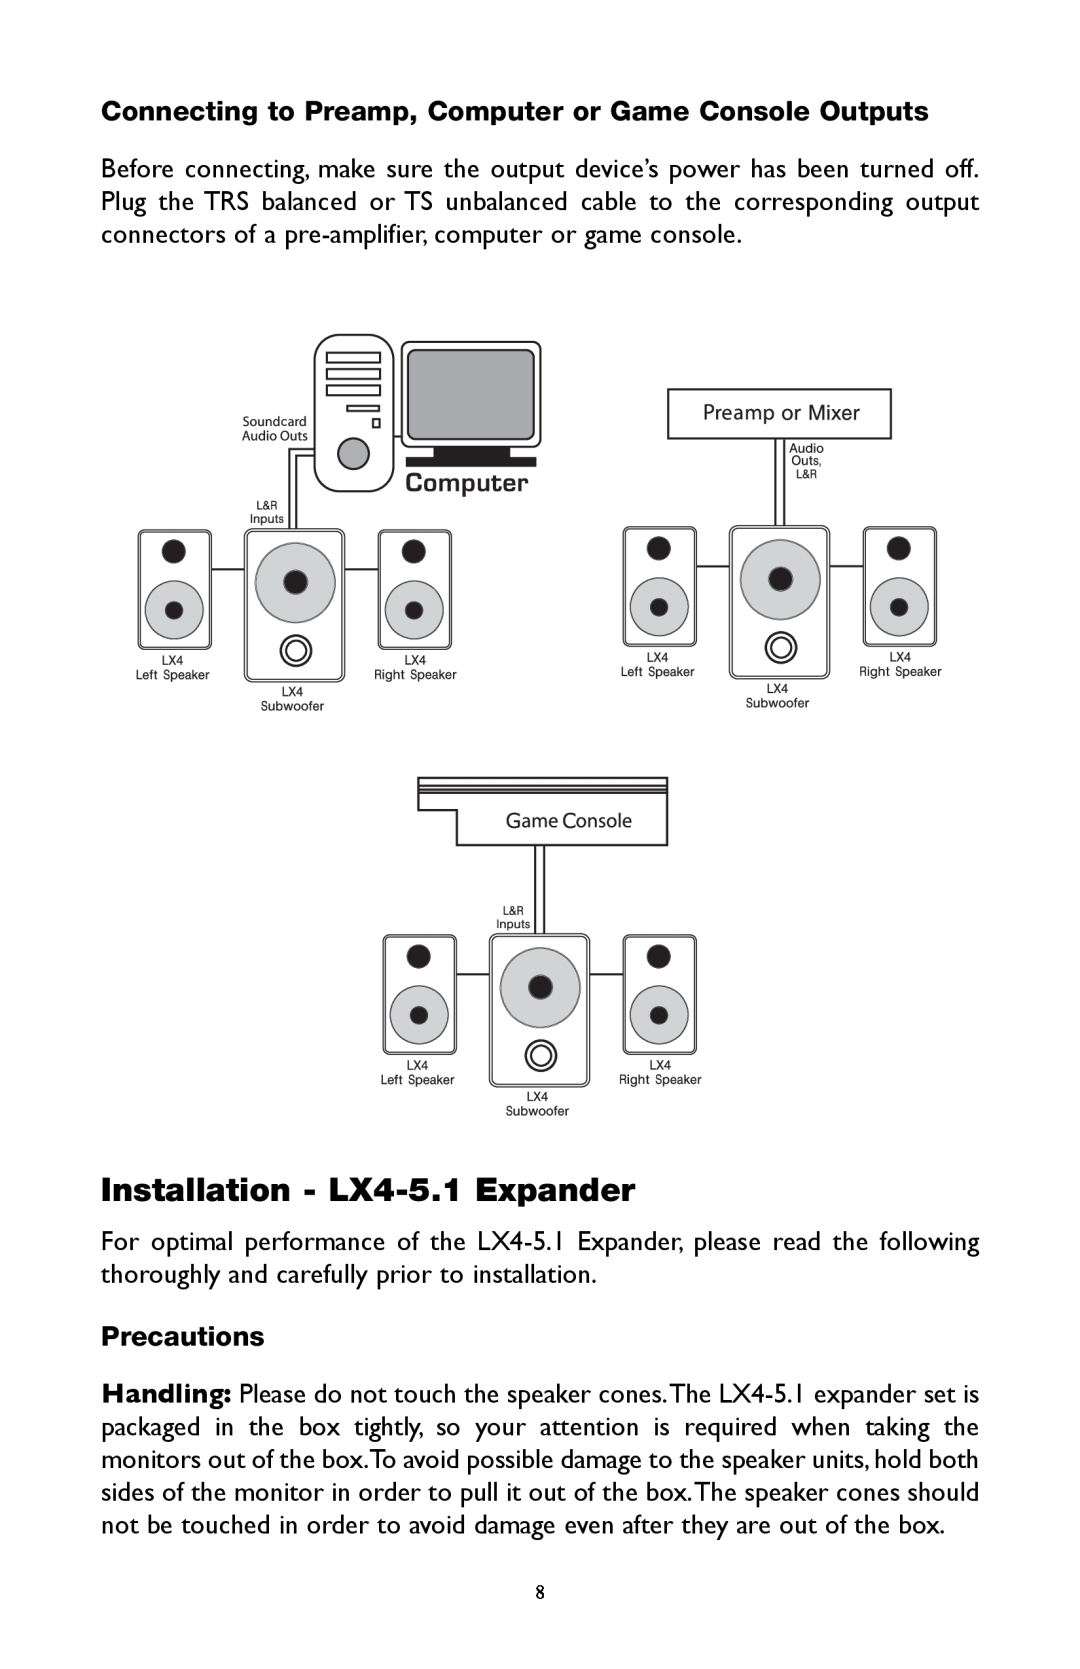 M-Audio warranty Installation - LX4-5.1Expander, Precautions 